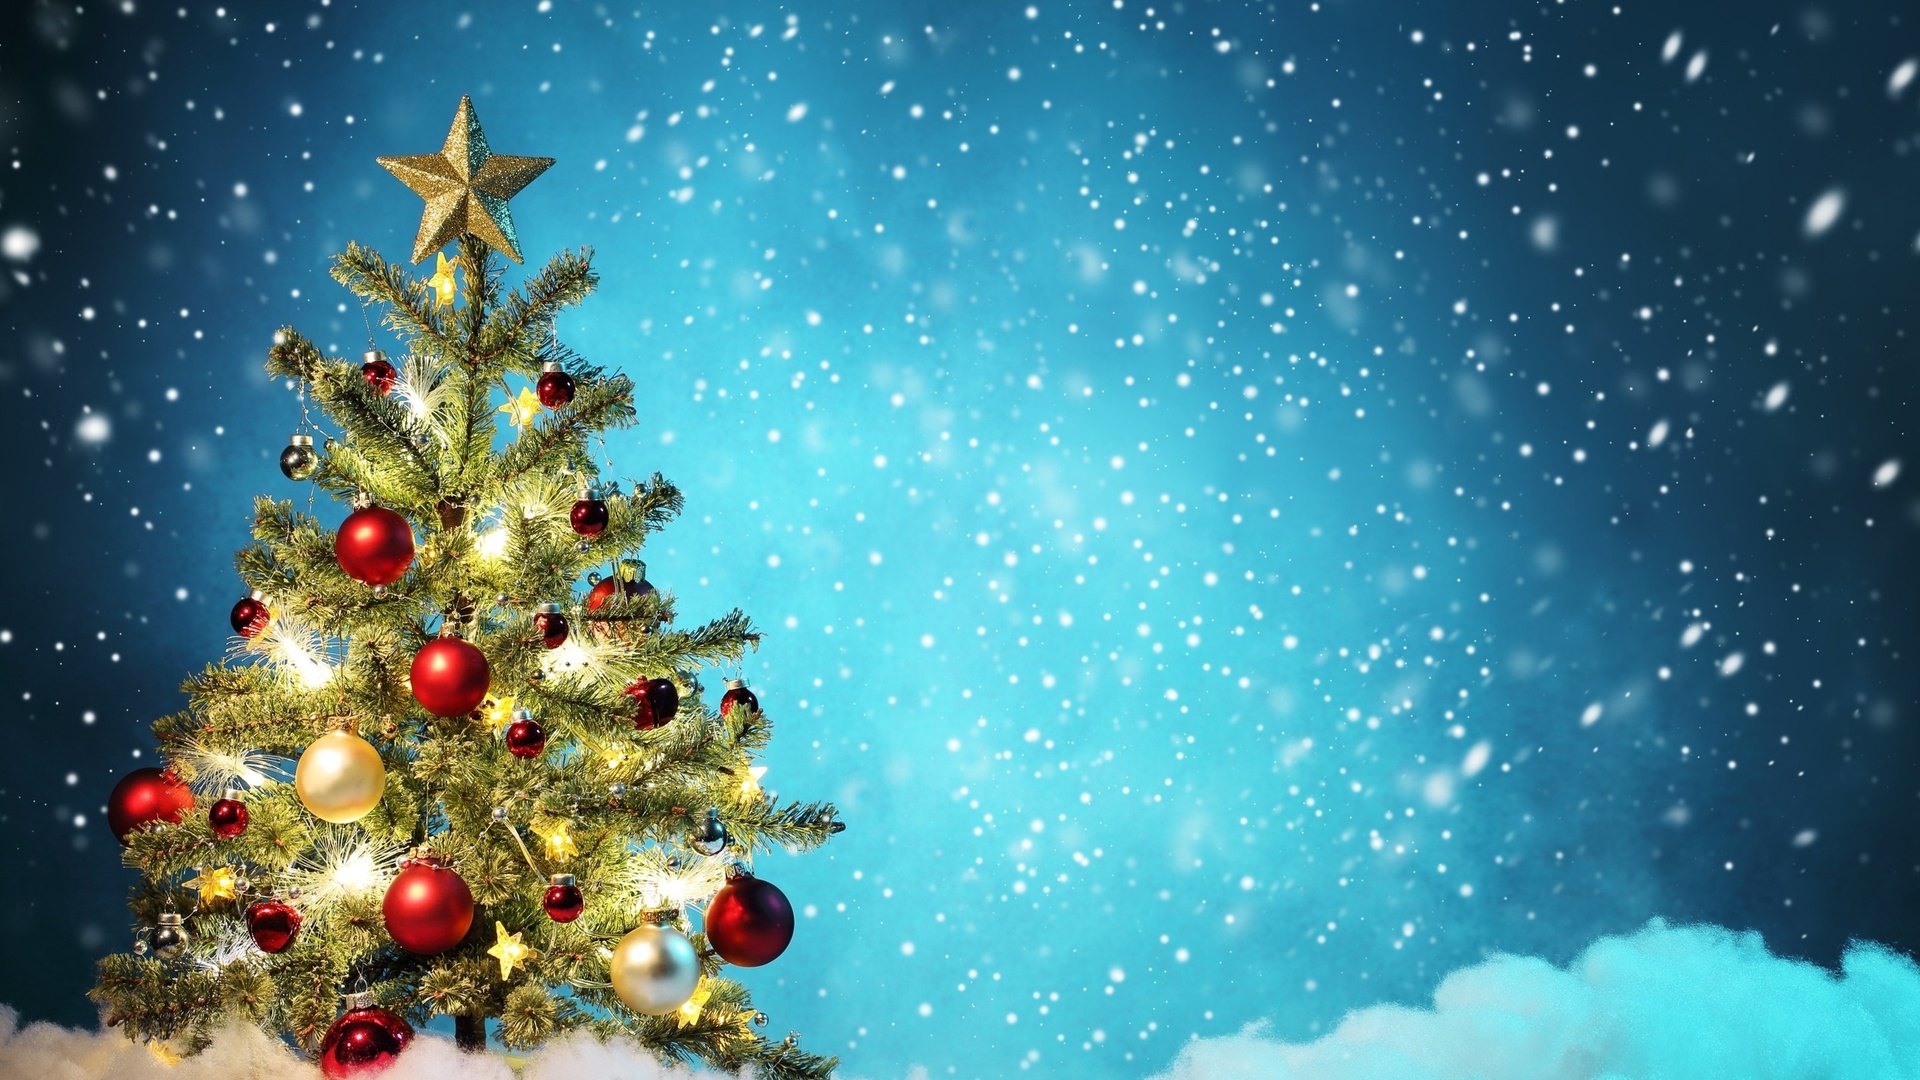 Image For Gt Christmas Tree Wallpaper